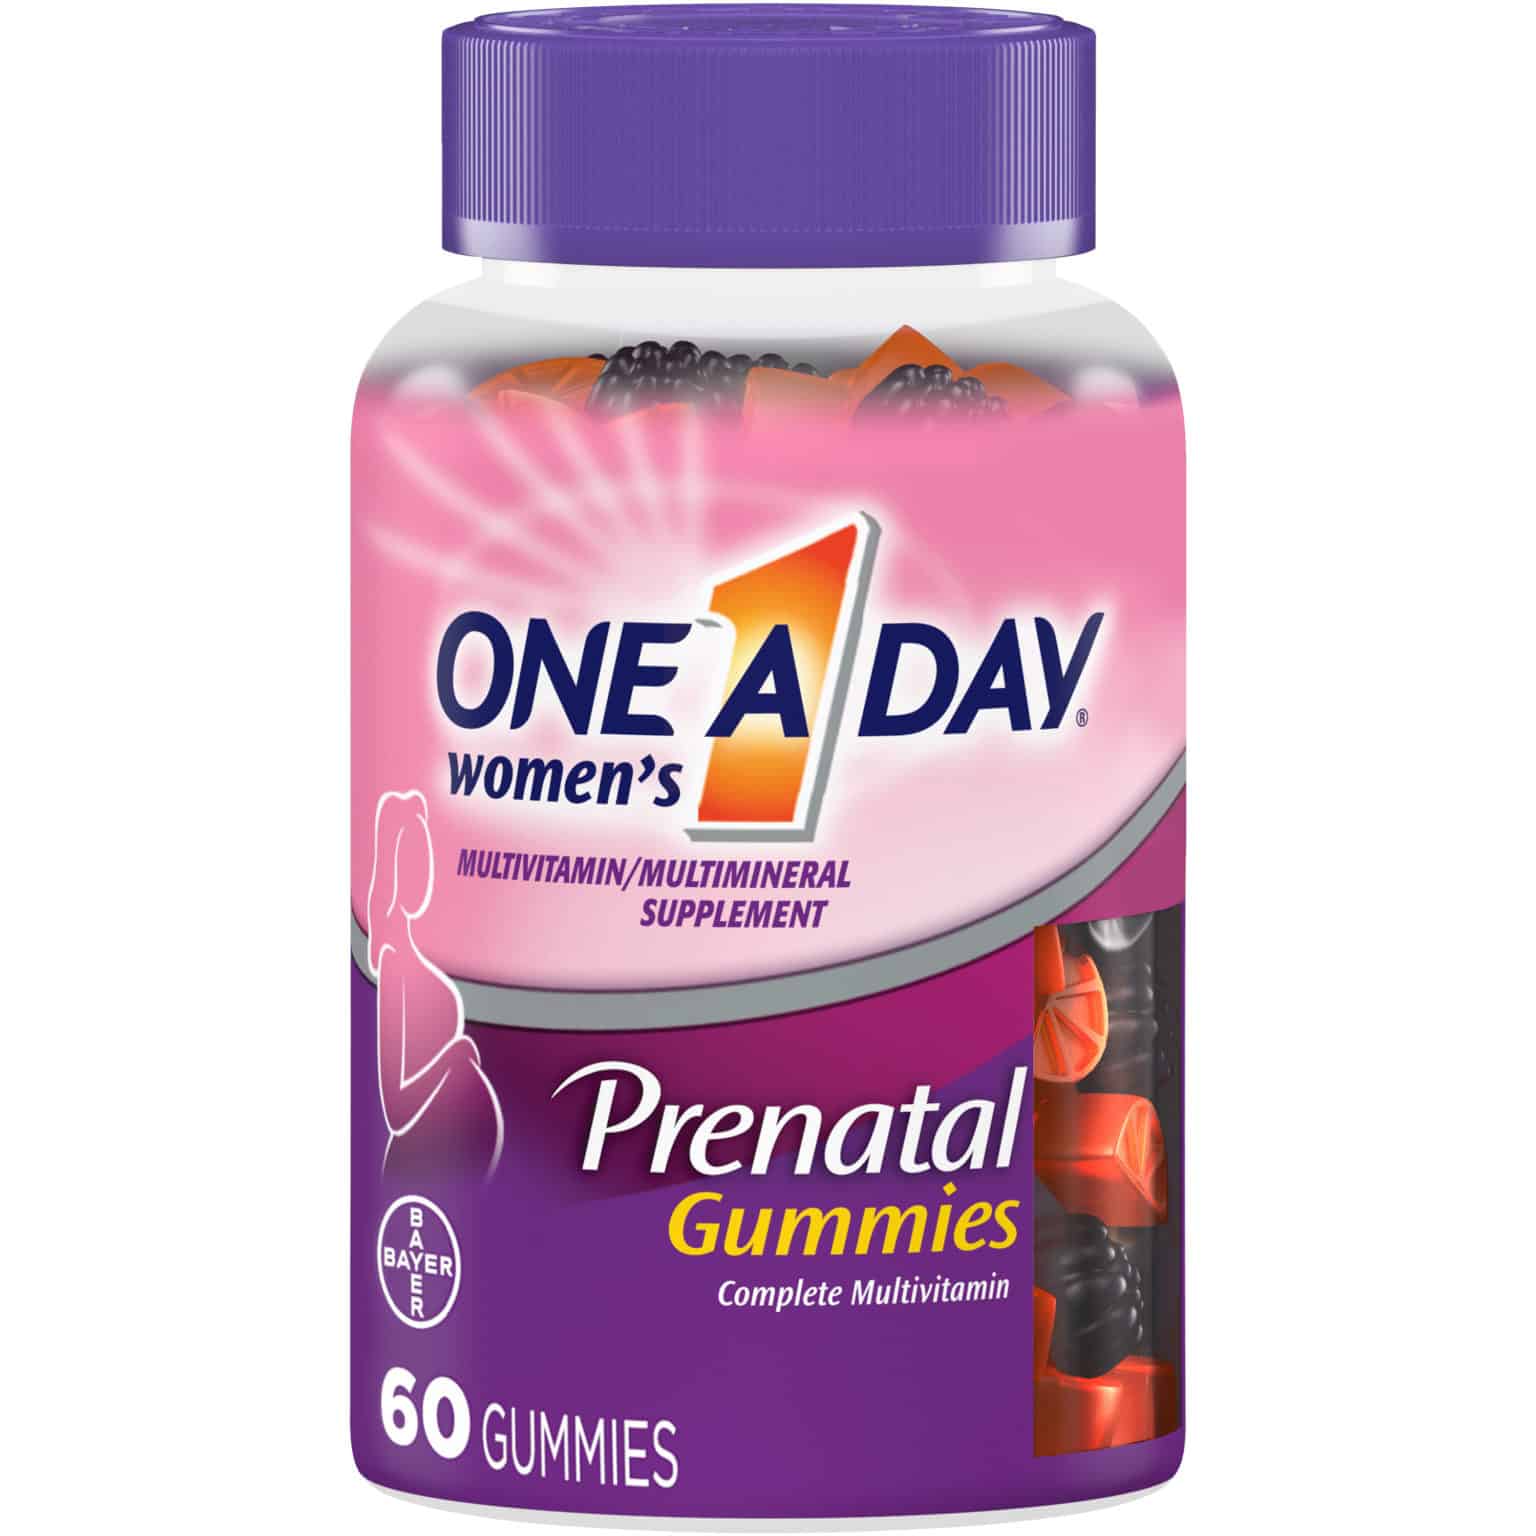 save-3-00-off-1-one-a-day-prenatal-gummies-printable-coupon